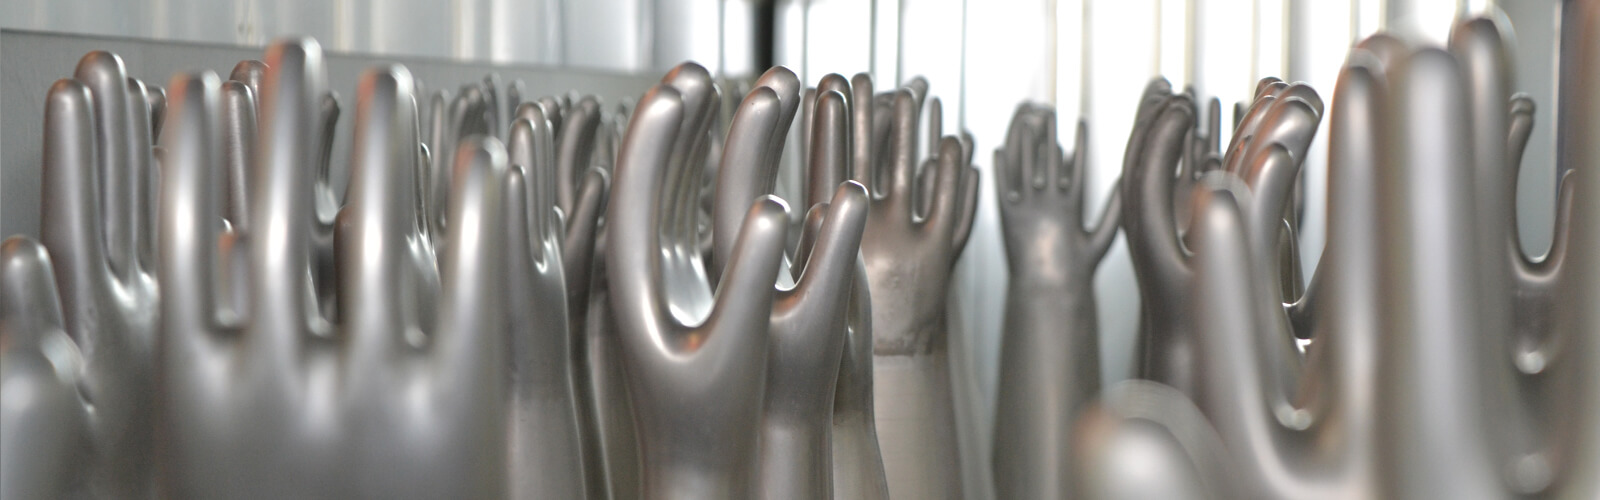 Handschuhformen für Glovebox-Handschuhe Jugitec ISOflex